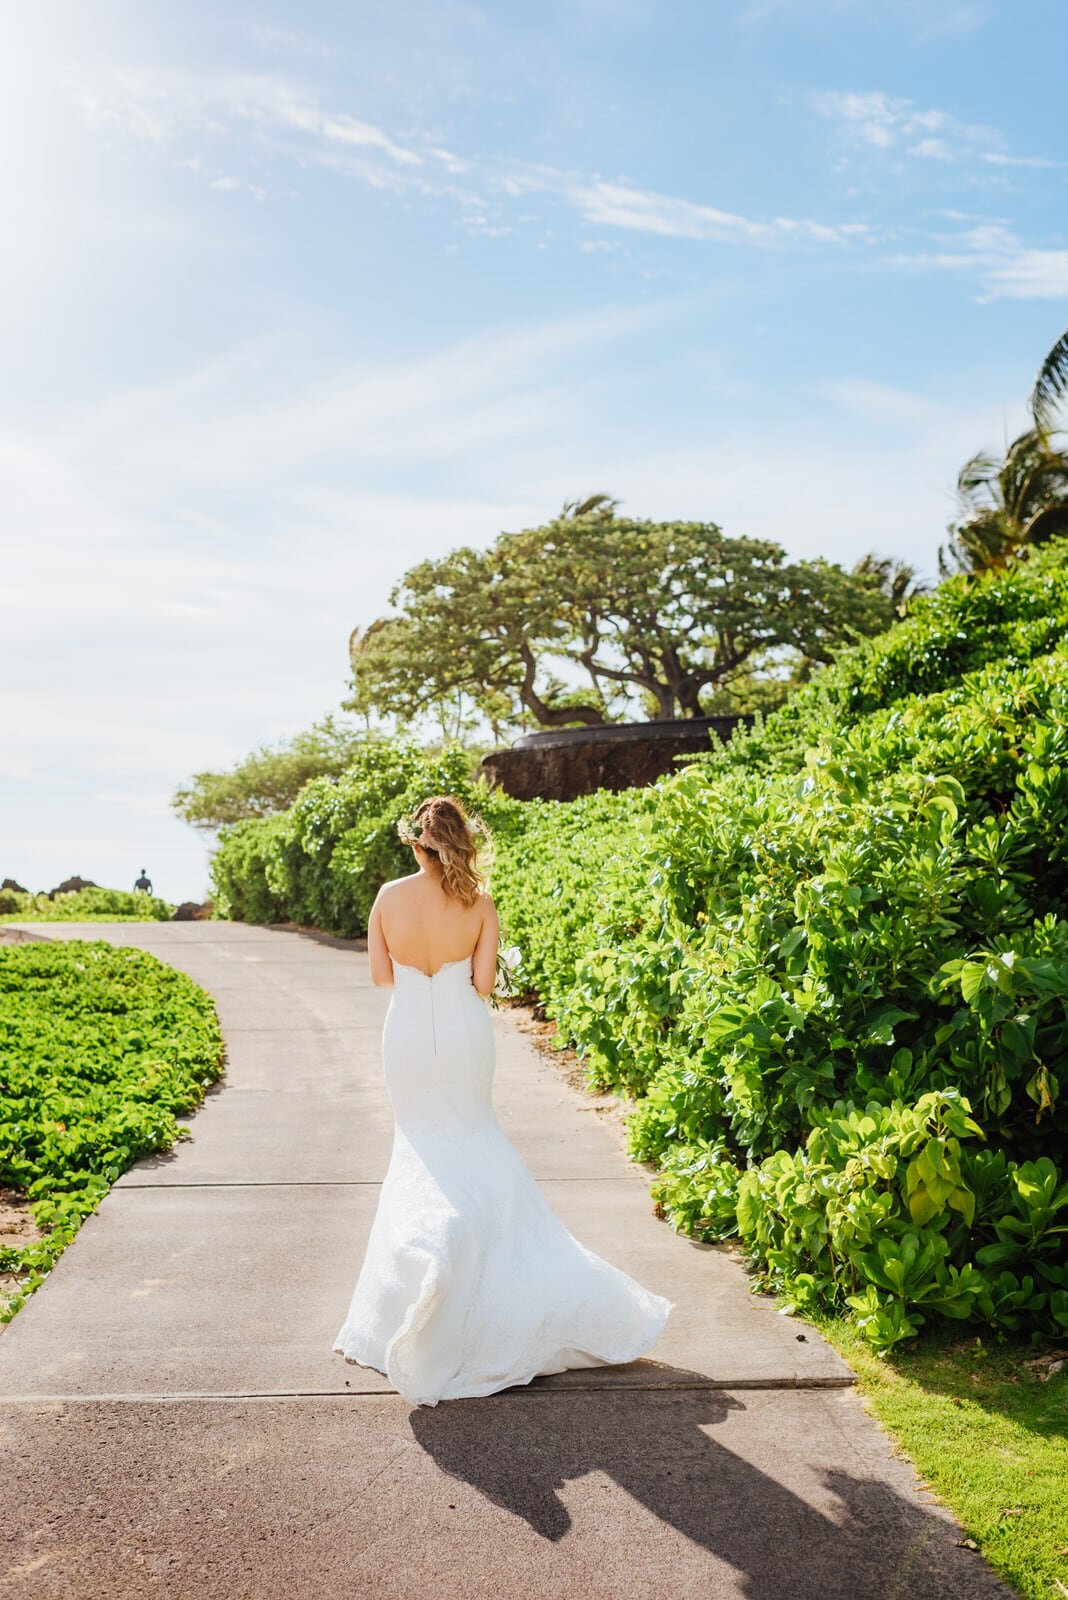 Big-Island-Hawaii-Elopement-Photographer-Beach-Wedding-5.jpg